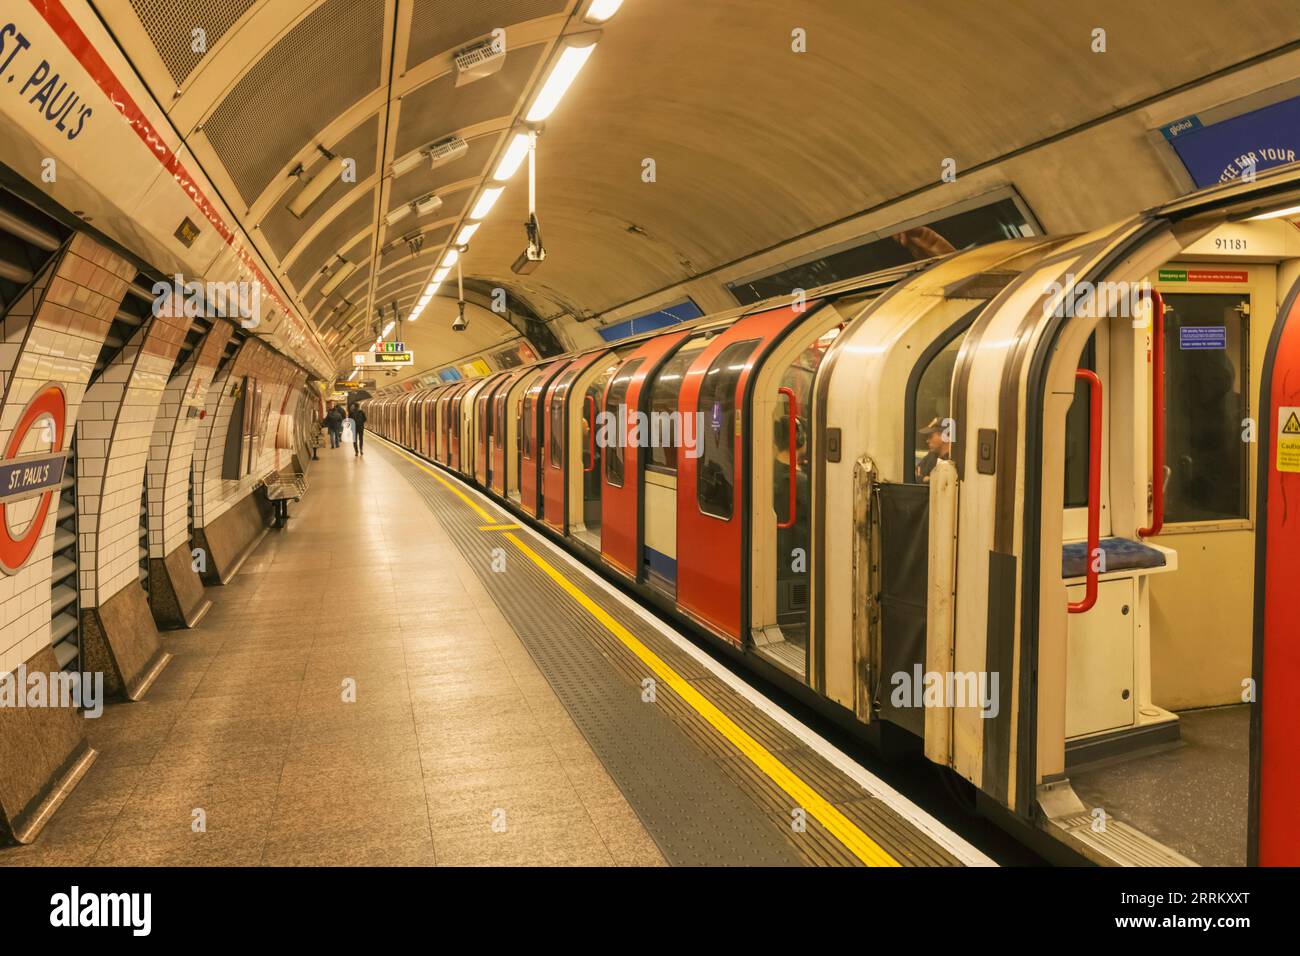 England, London, London Underground, Empty Platform with Stationary Train Stock Photo